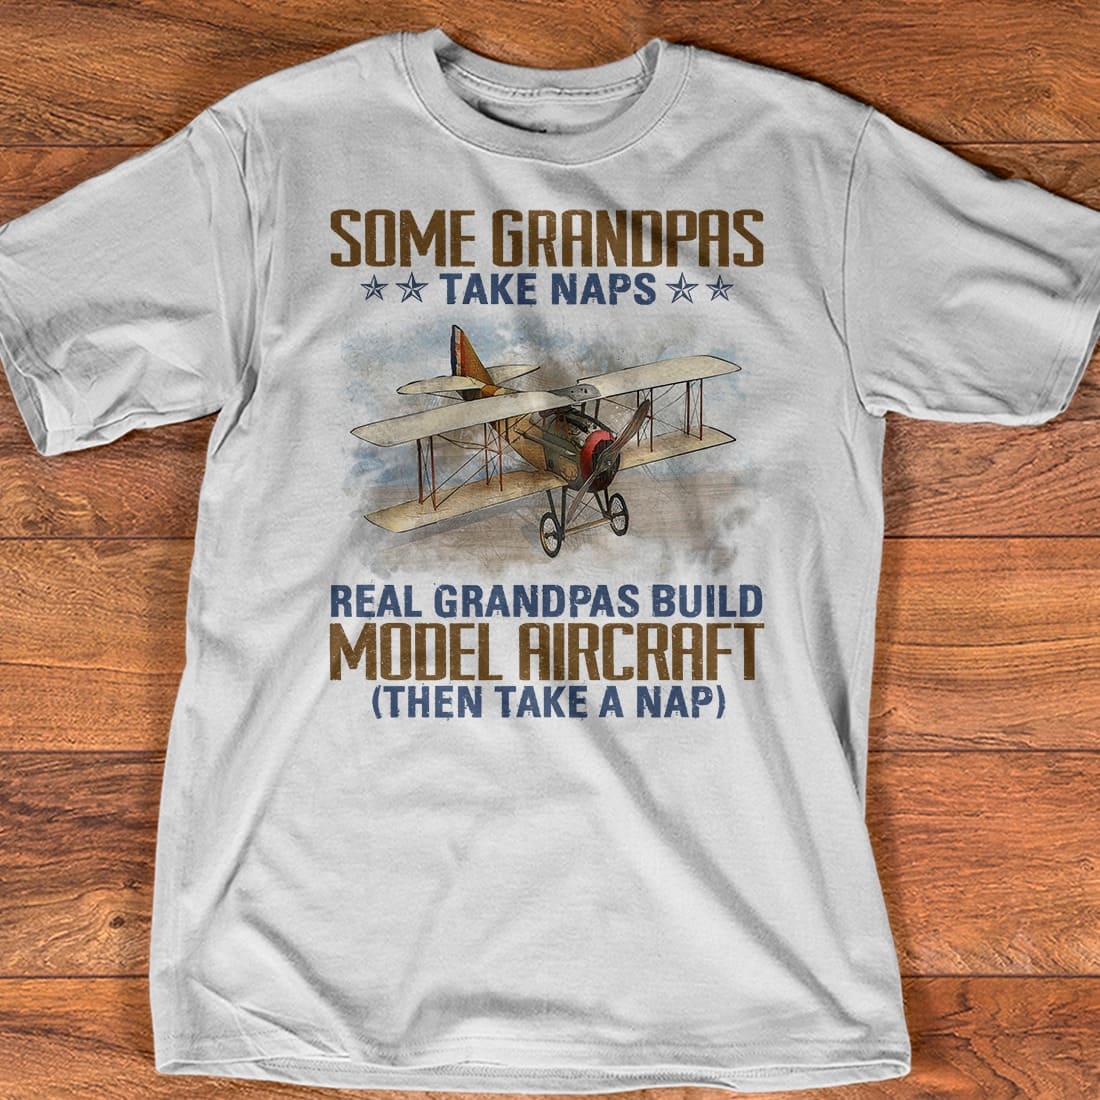 Some grandpas take naps, real grandpas build model aircraft - Model aircraft builder, gift for grandpa